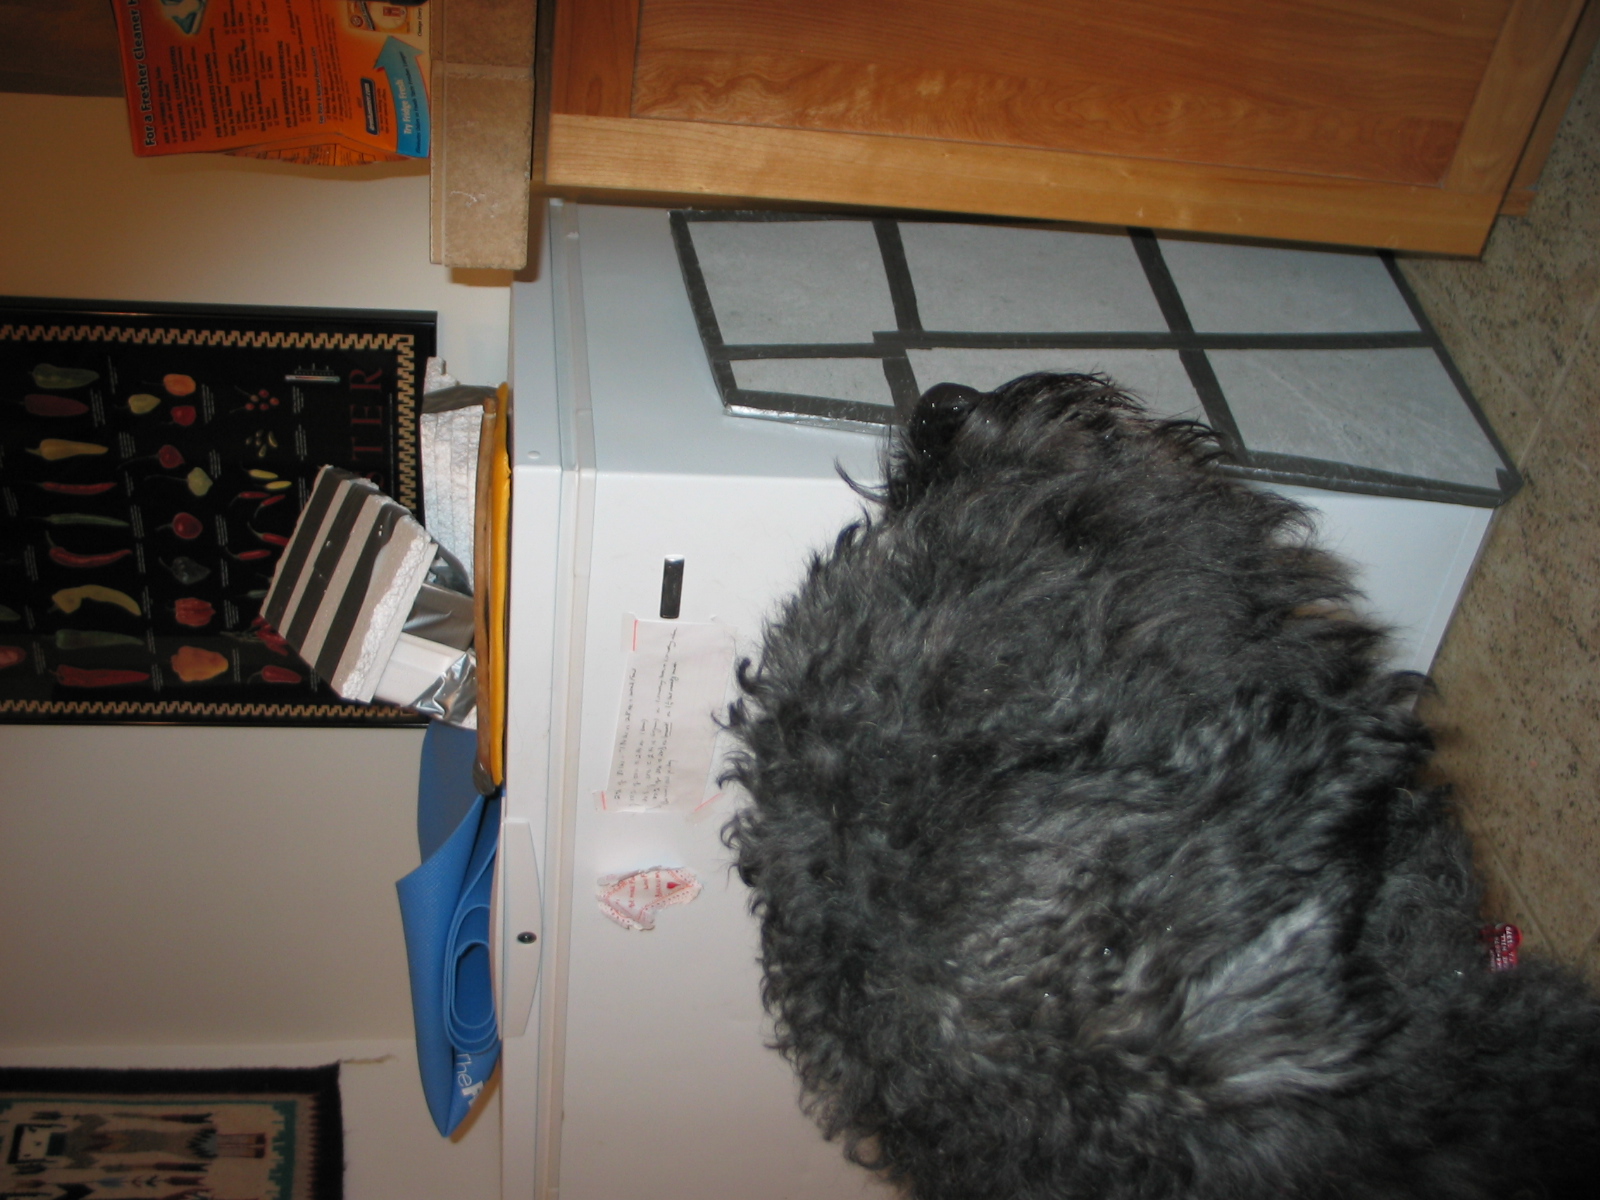 Dog-training bathroom: Meat freezer, dog nail file/scratching board, yoga